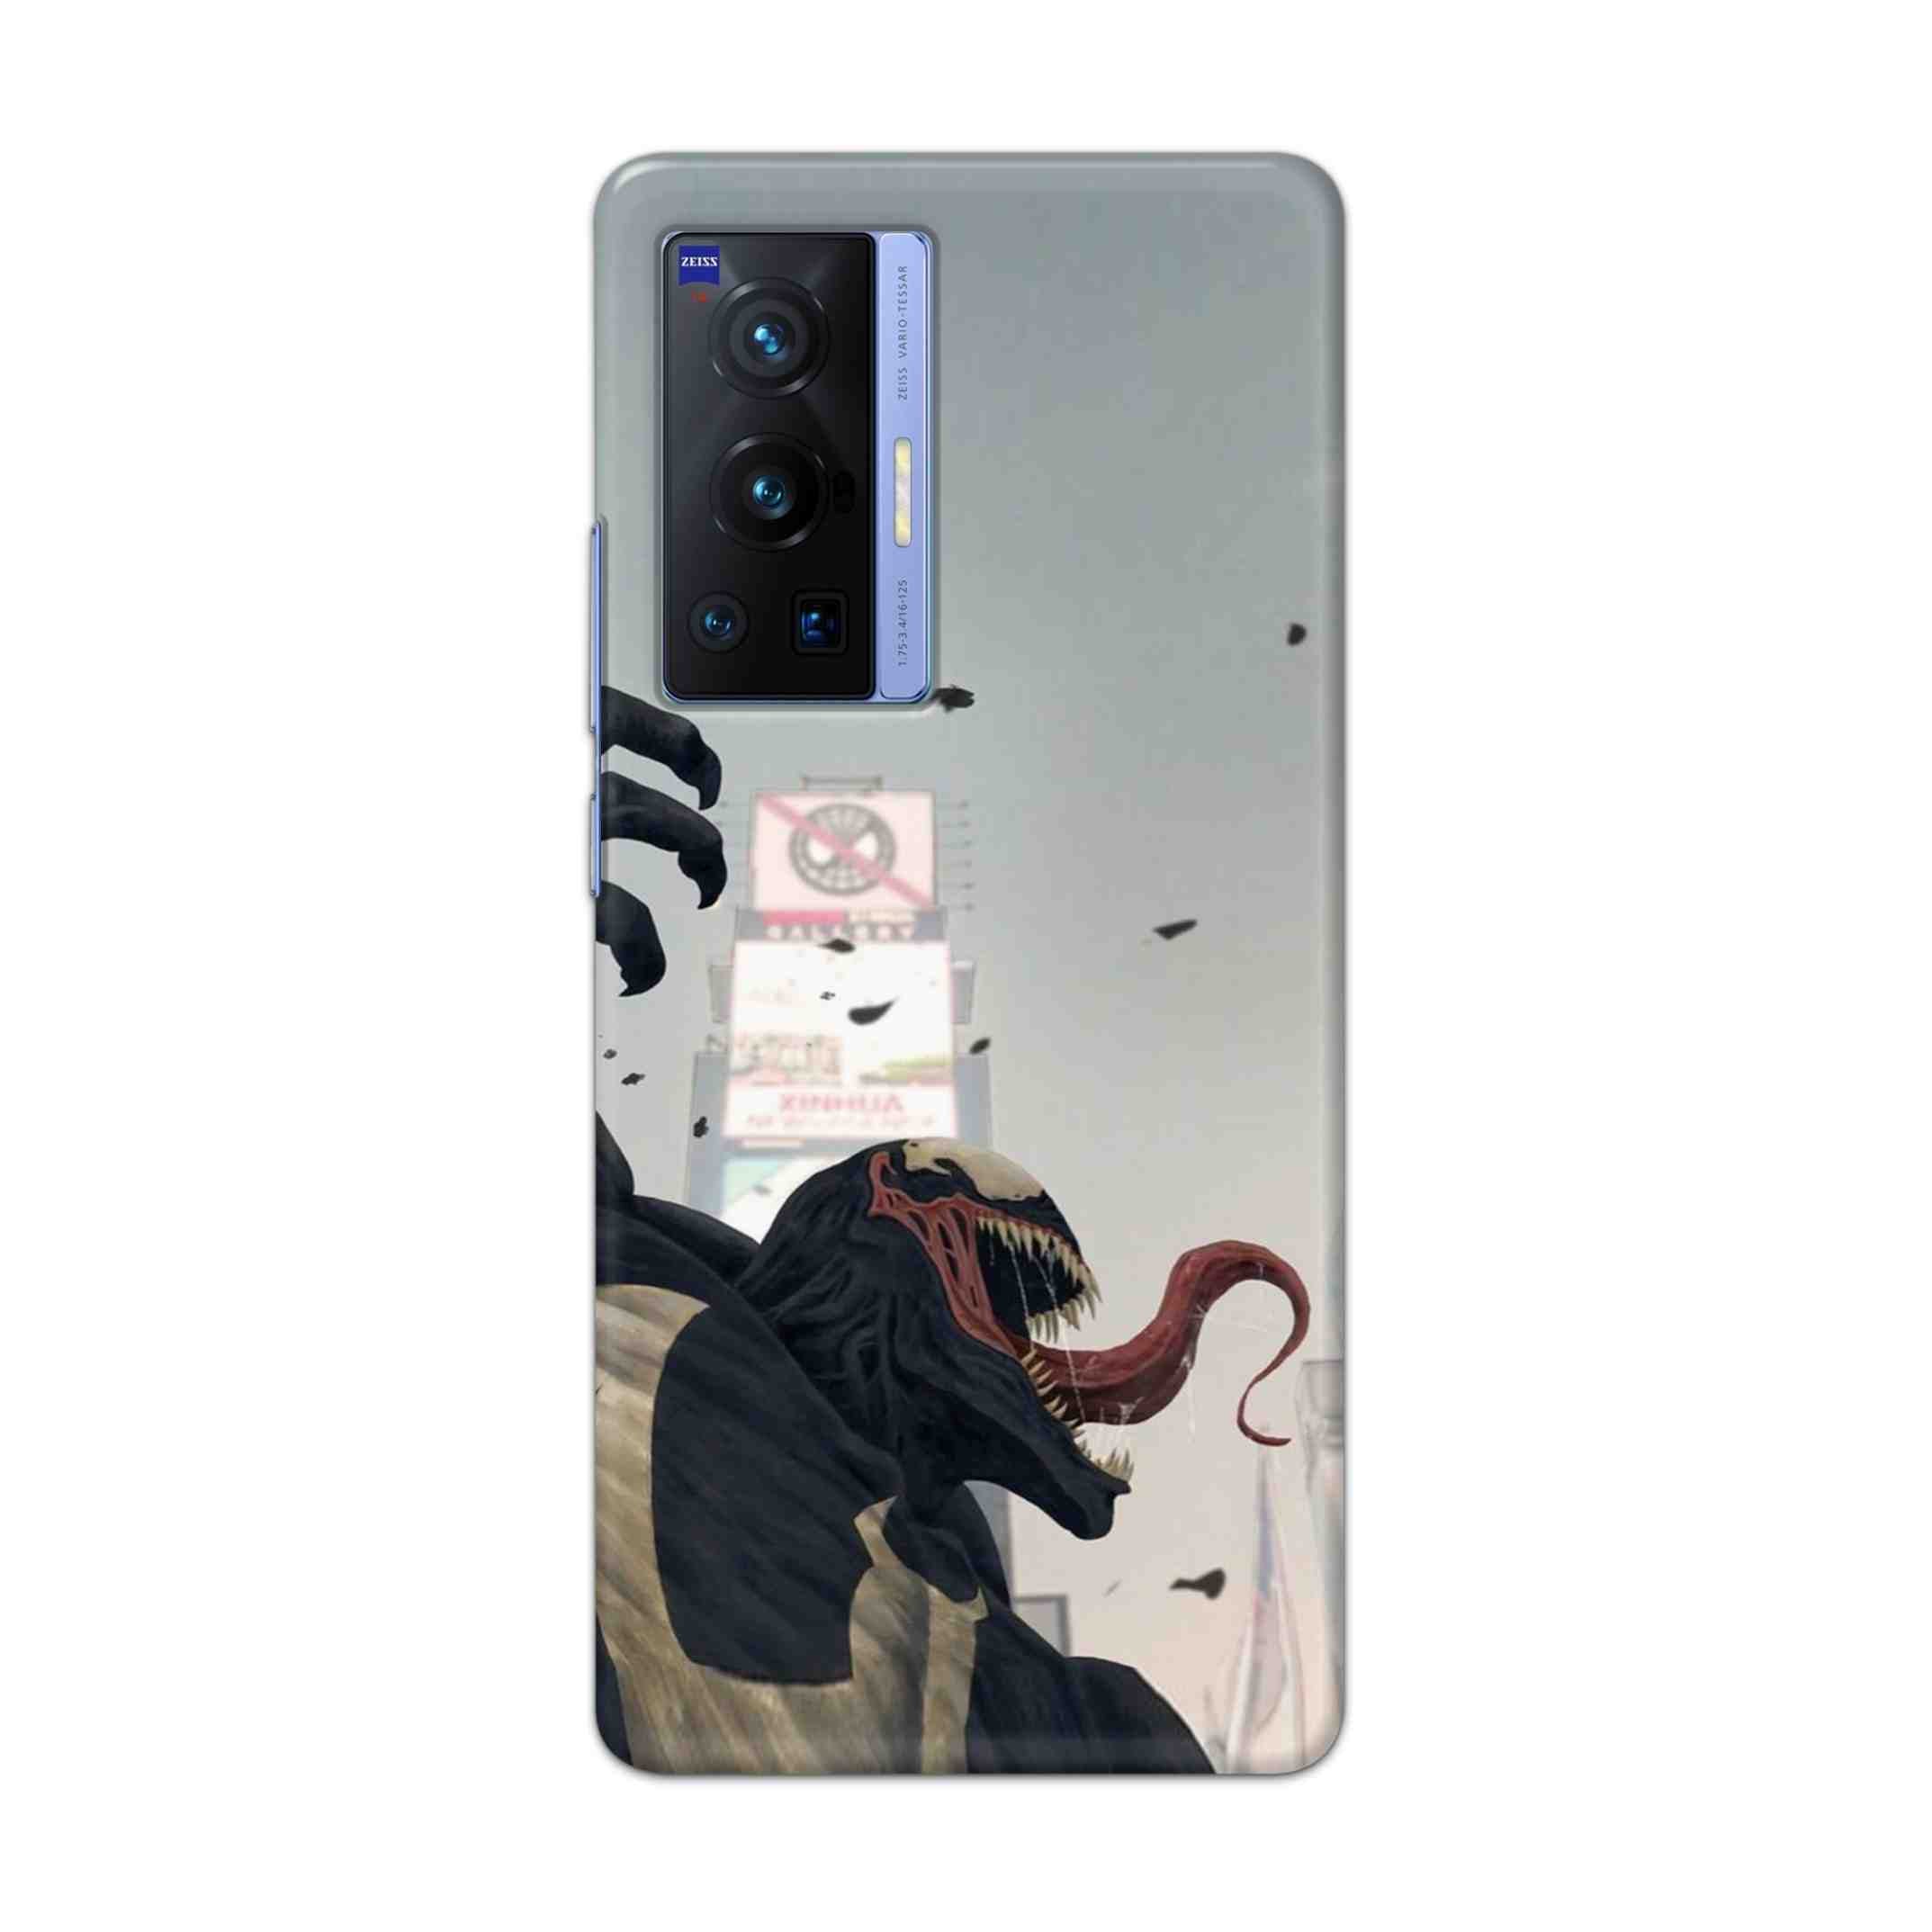 Buy Venom Crunch Hard Back Mobile Phone Case Cover For Vivo X70 Pro Online